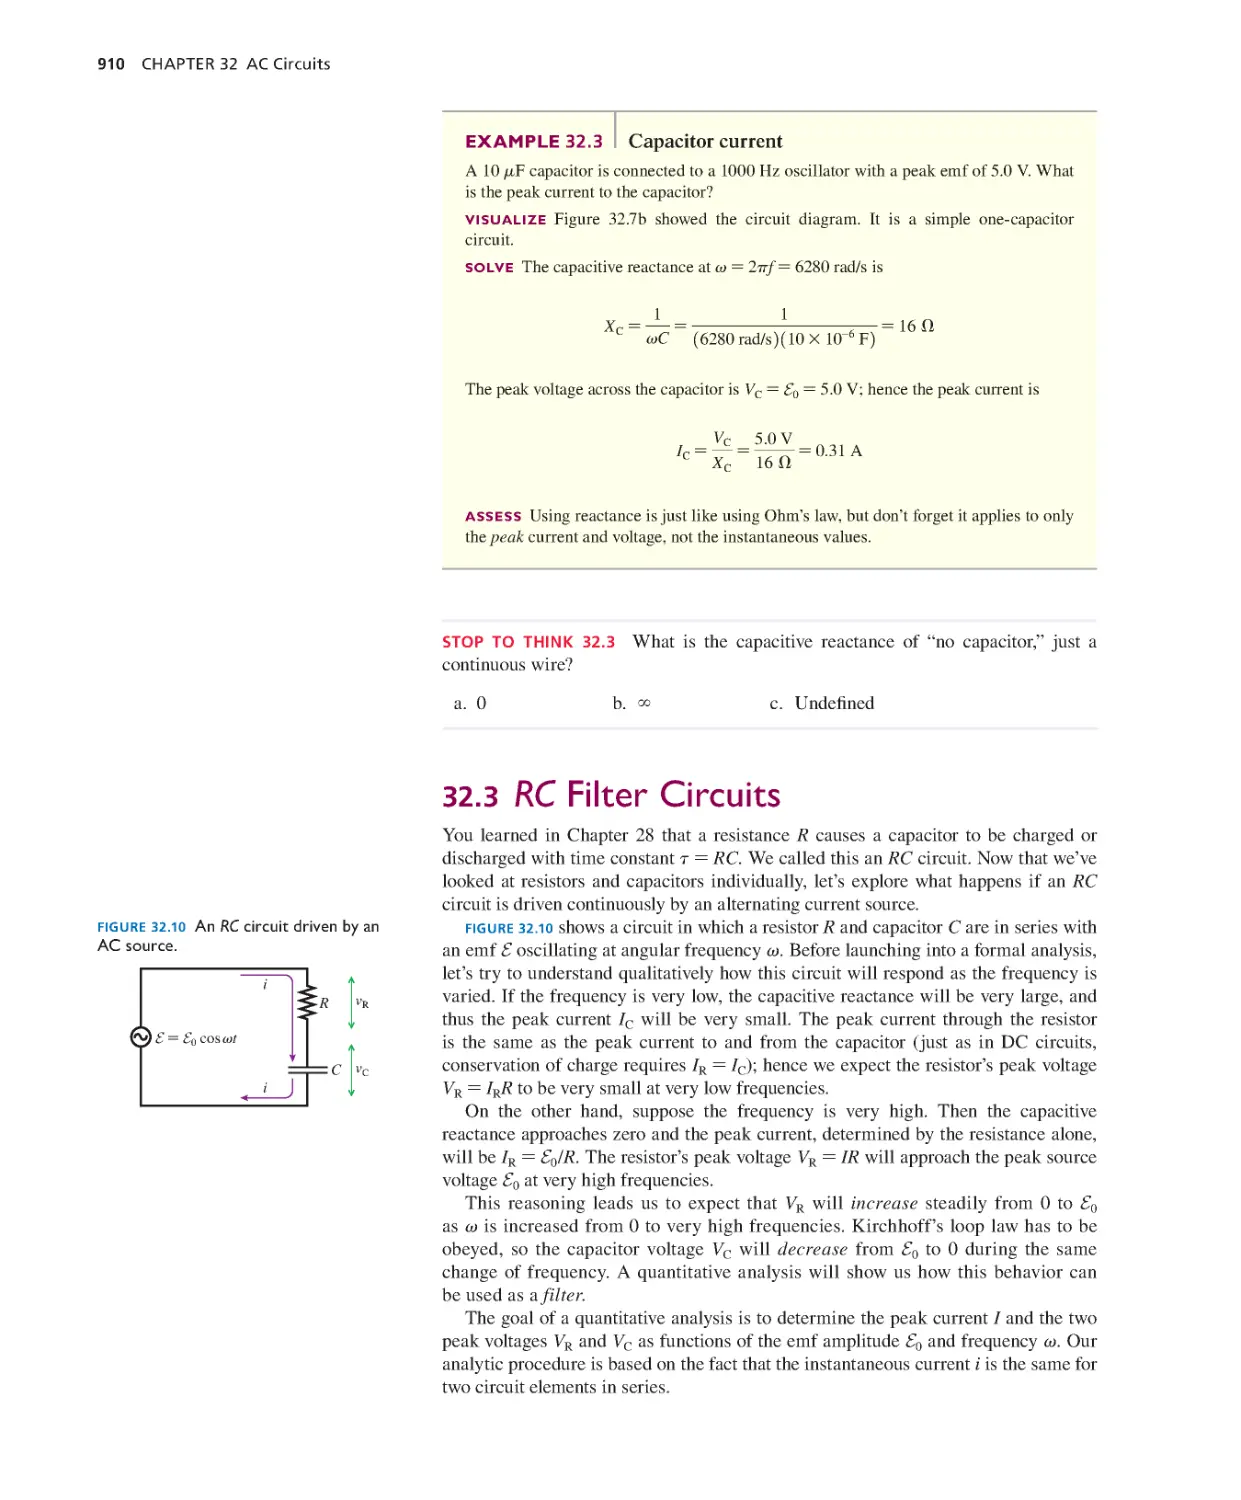 32.3. RC Filter Circuits